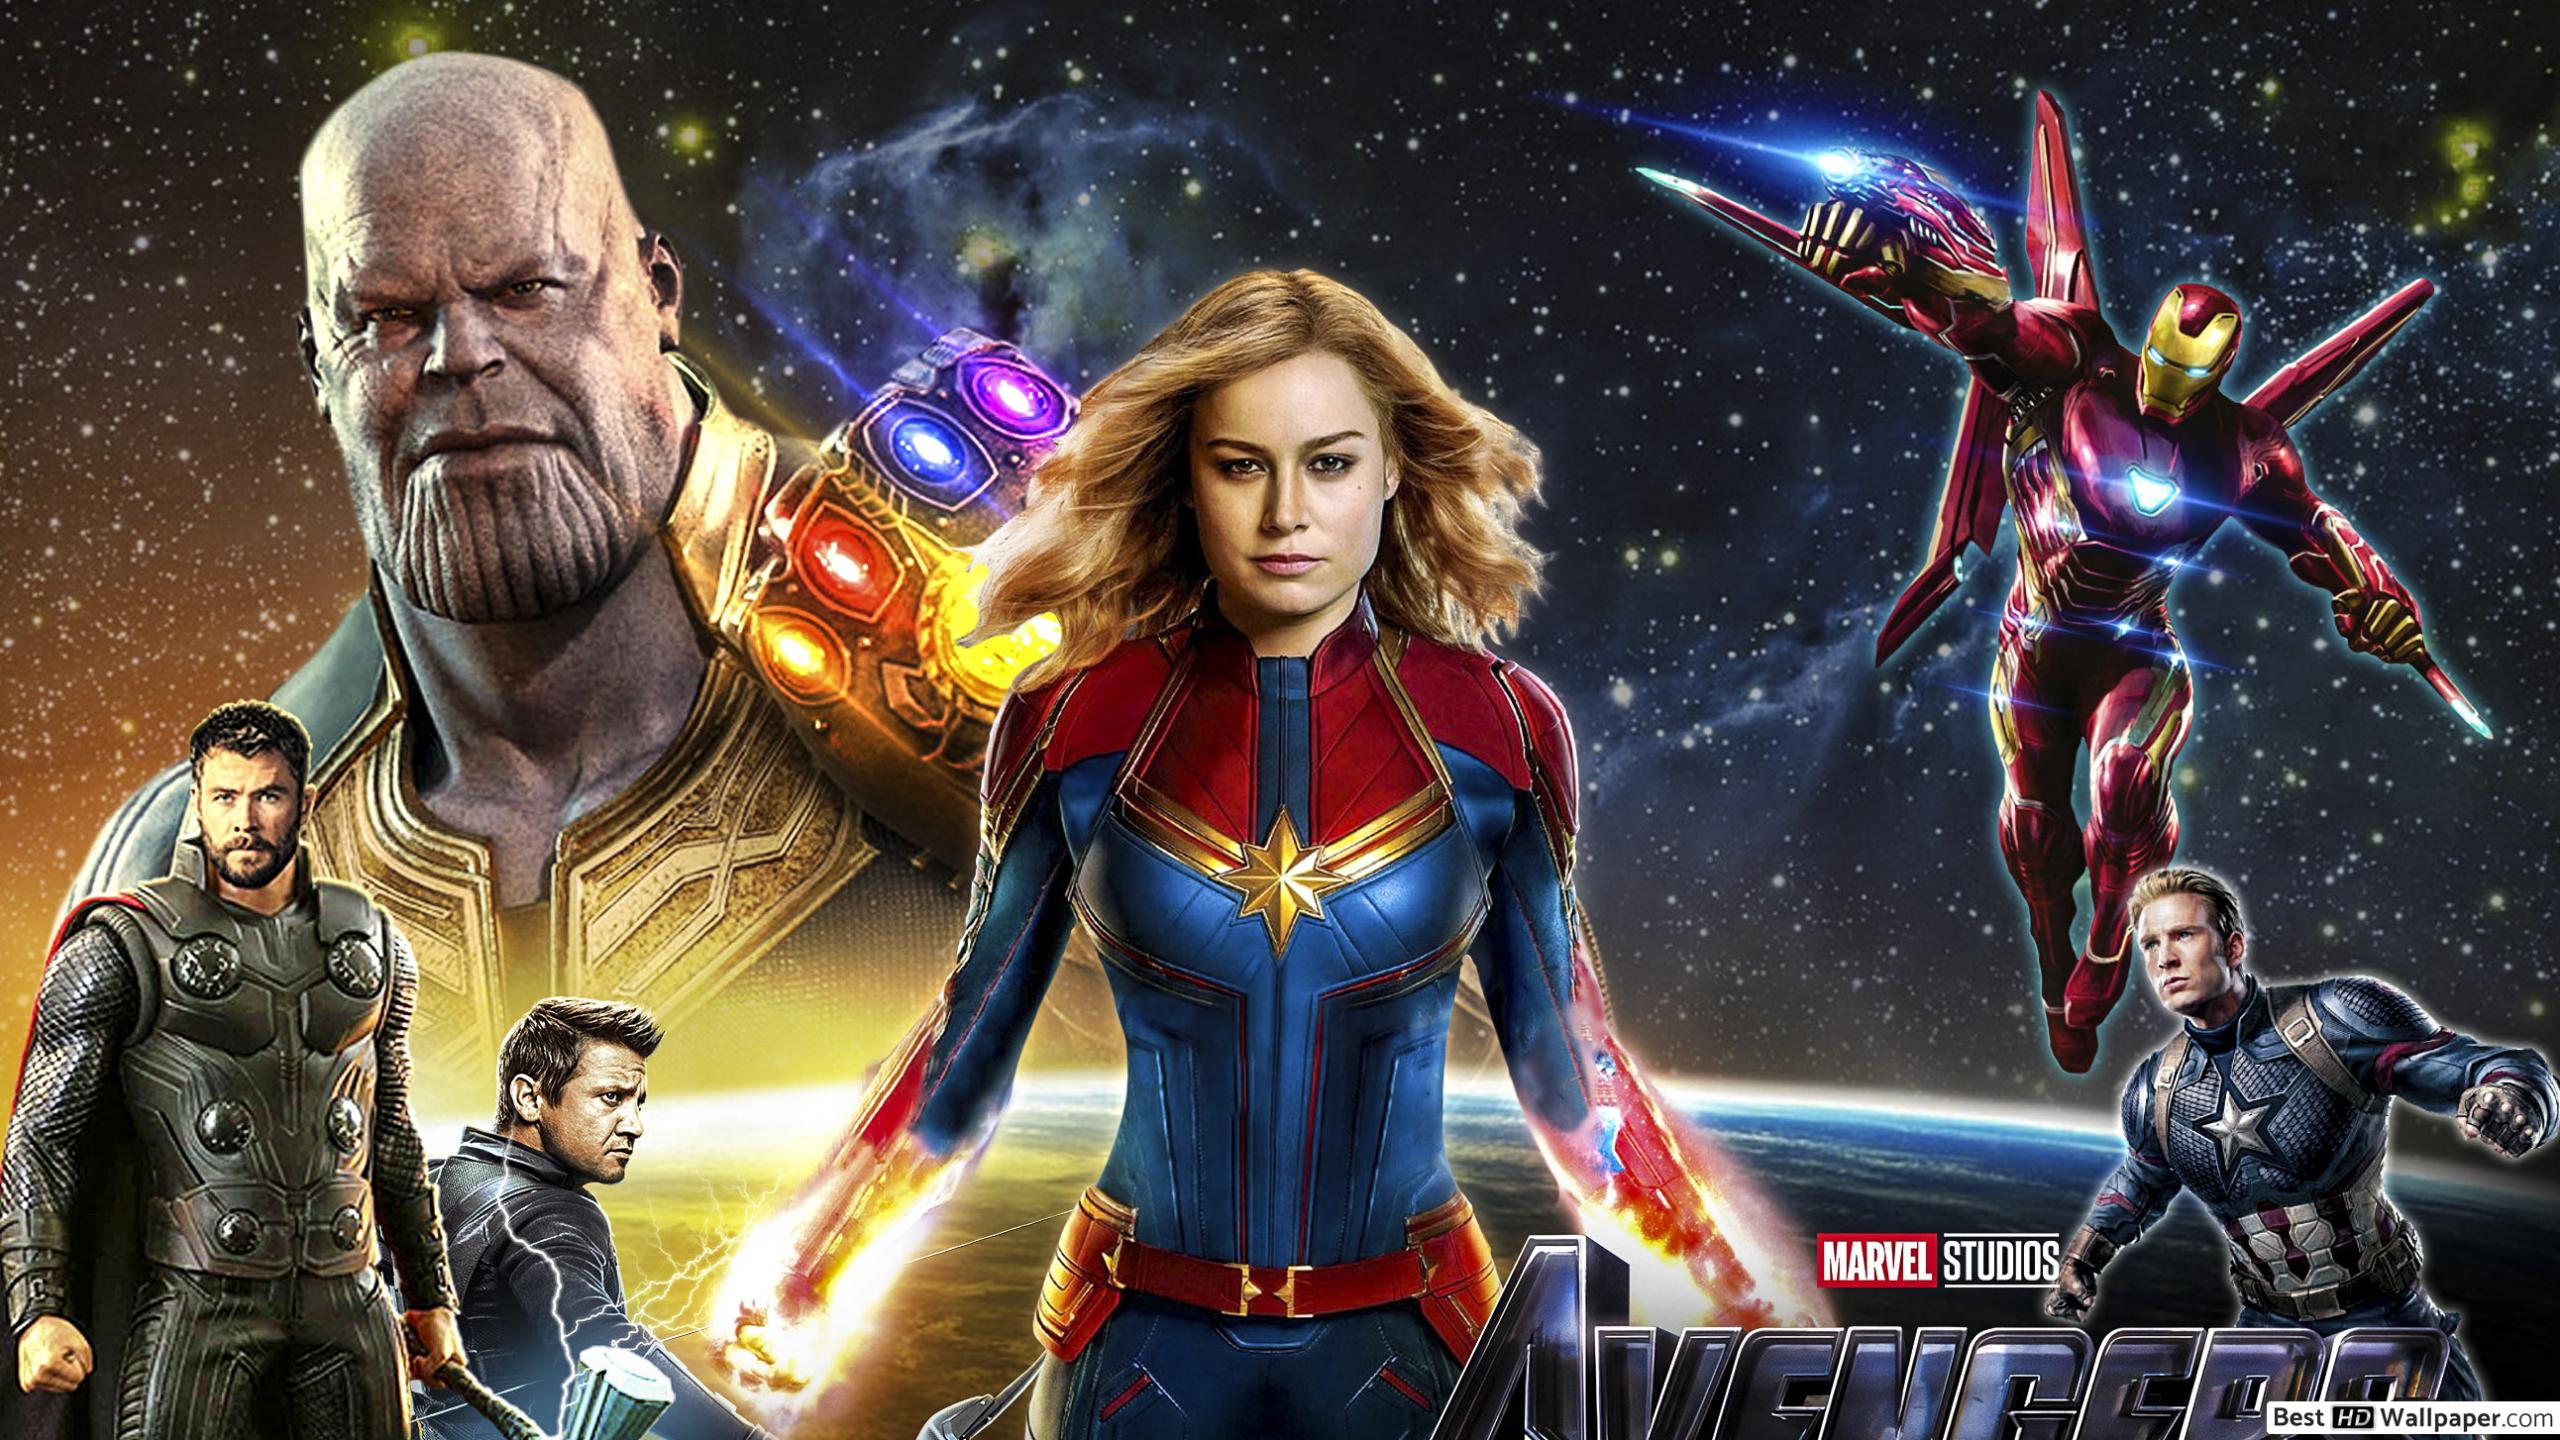 Avengers endgame HD wallpaper download